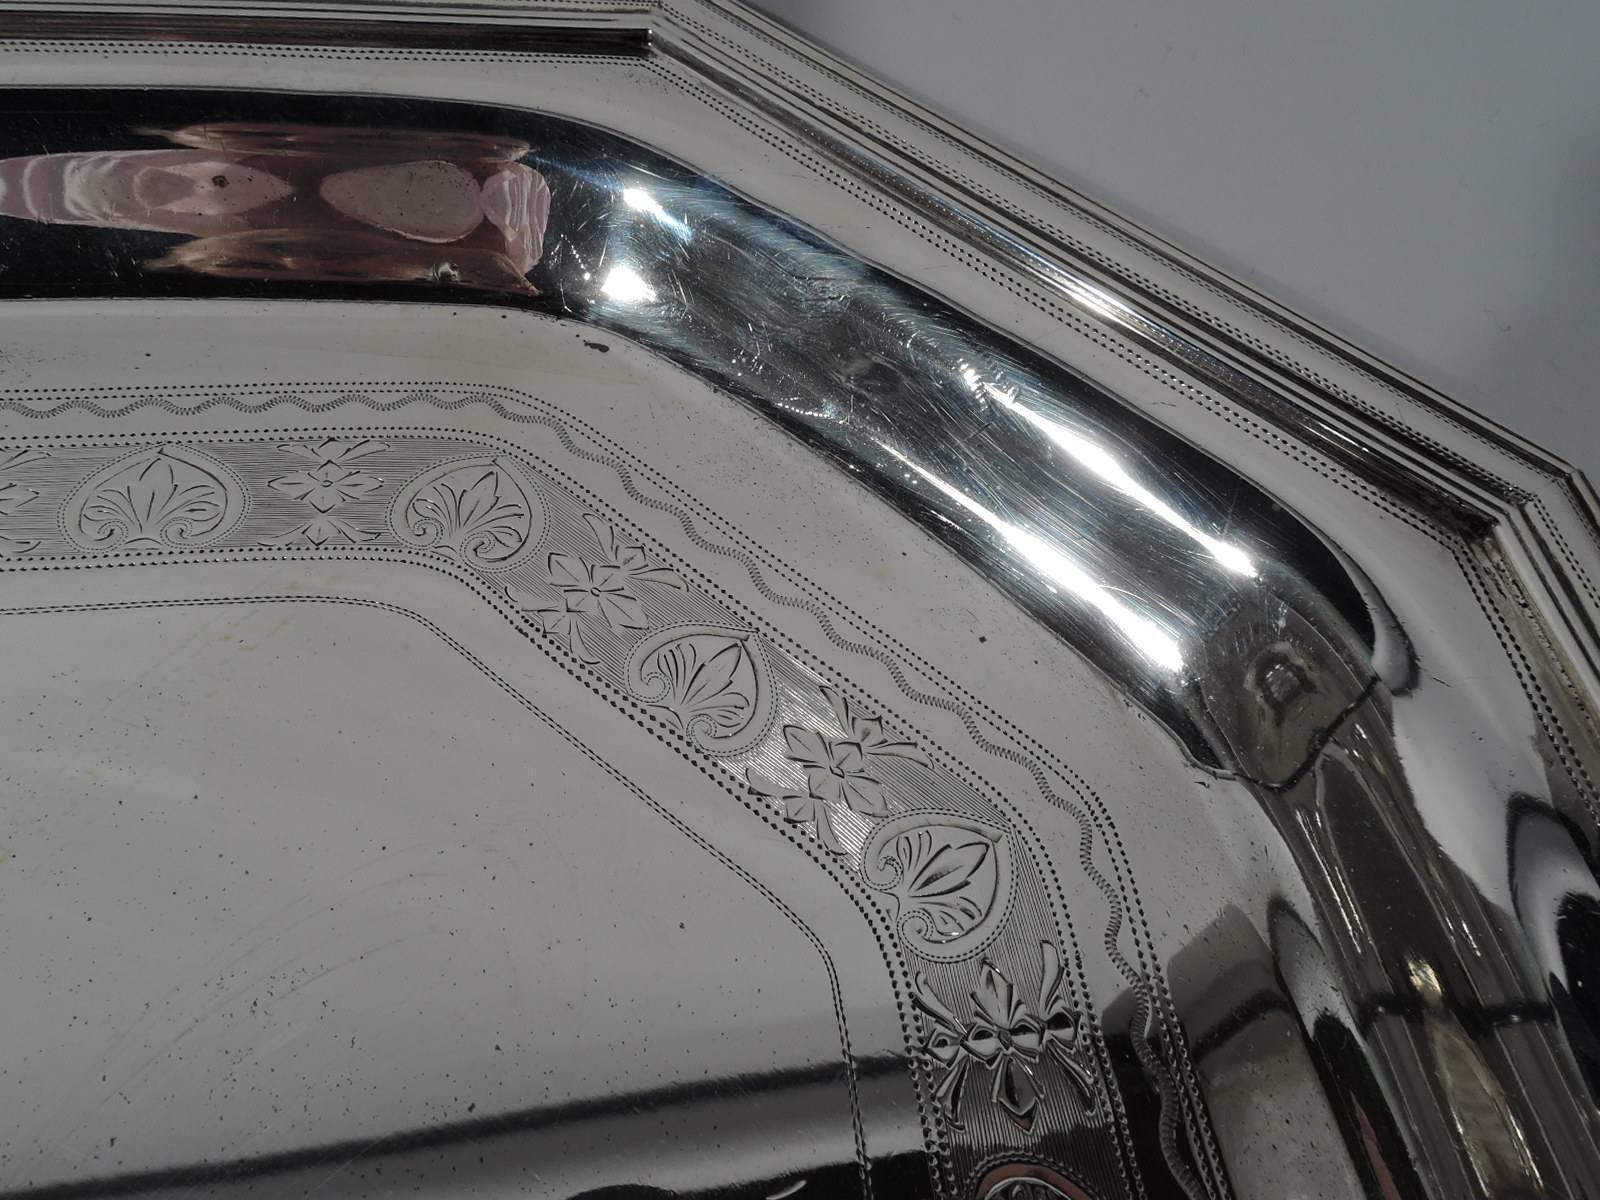 American Antique Edwardian Sterling Silver Tea Tray by Graff, Washbourne & Dunn